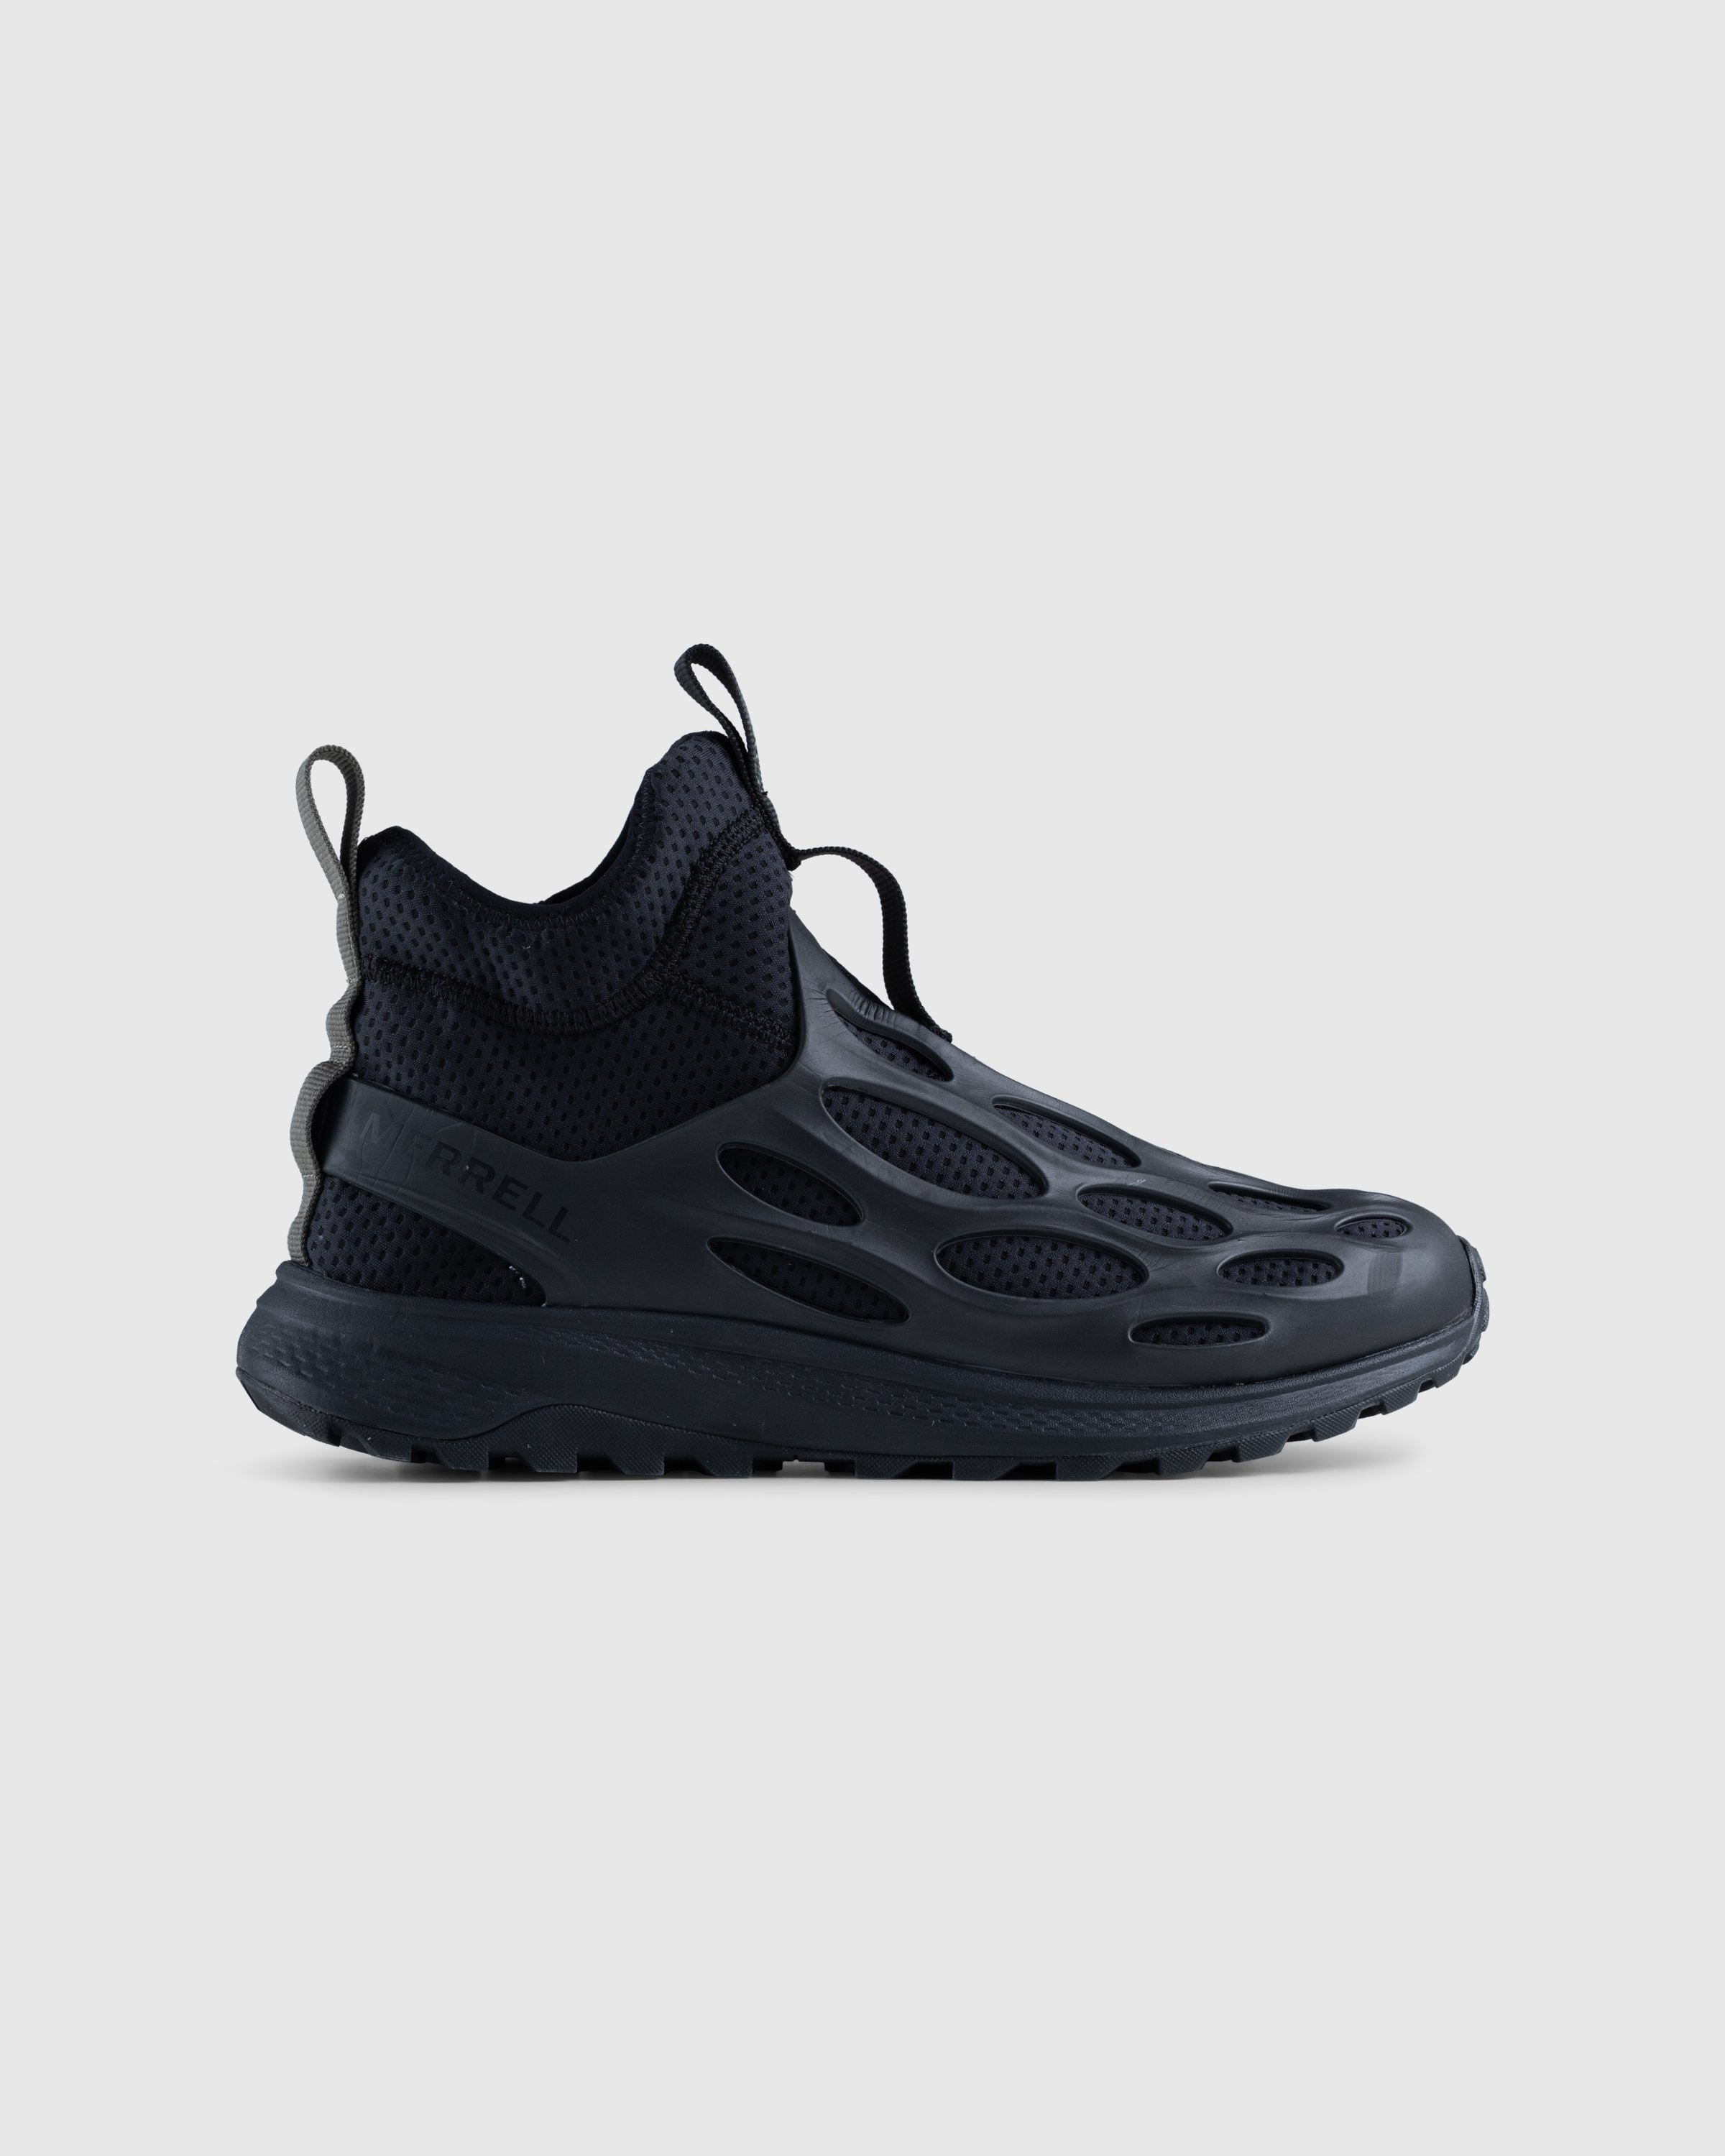 Merrell – Hydro Runner Mid GTX Black  - Sneakers - Black - Image 1